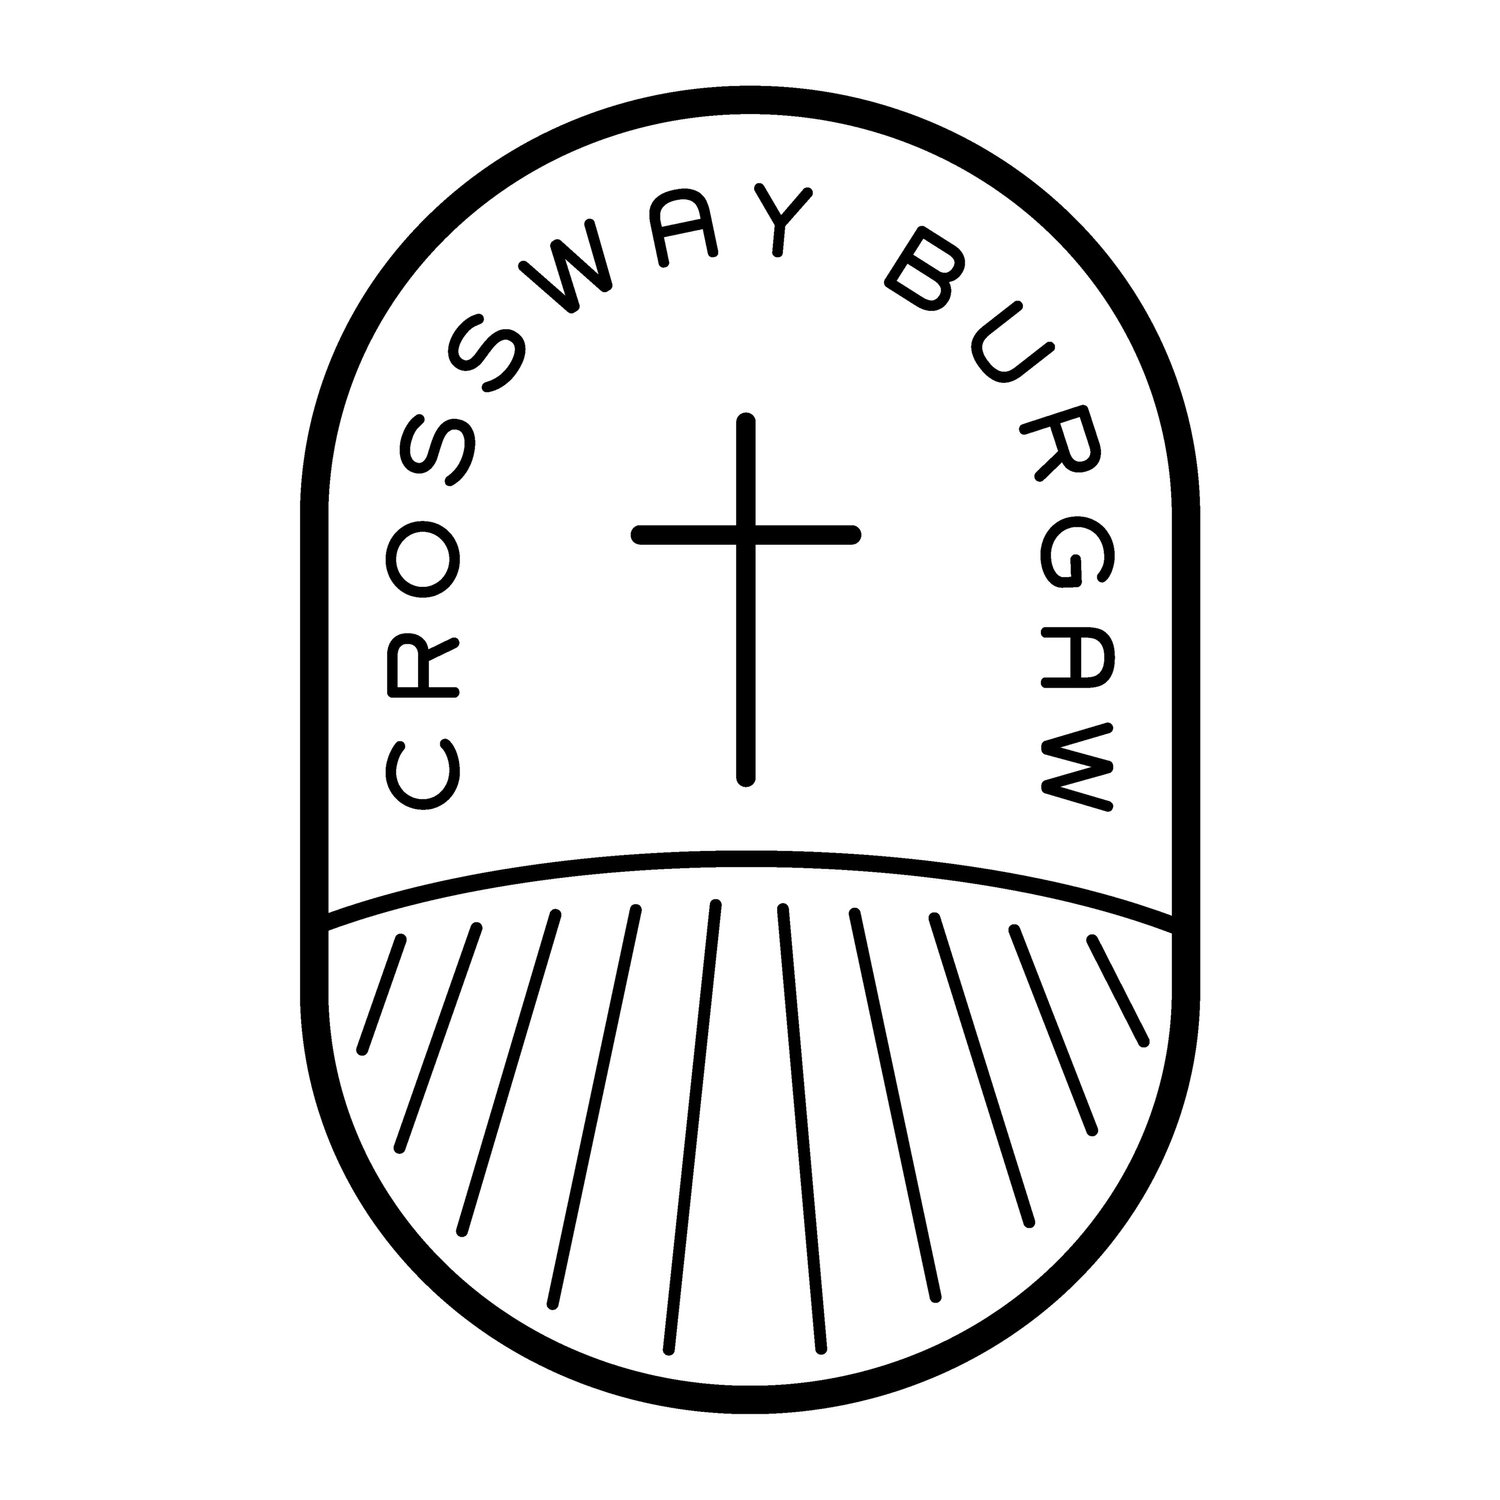 Crossway Burgaw